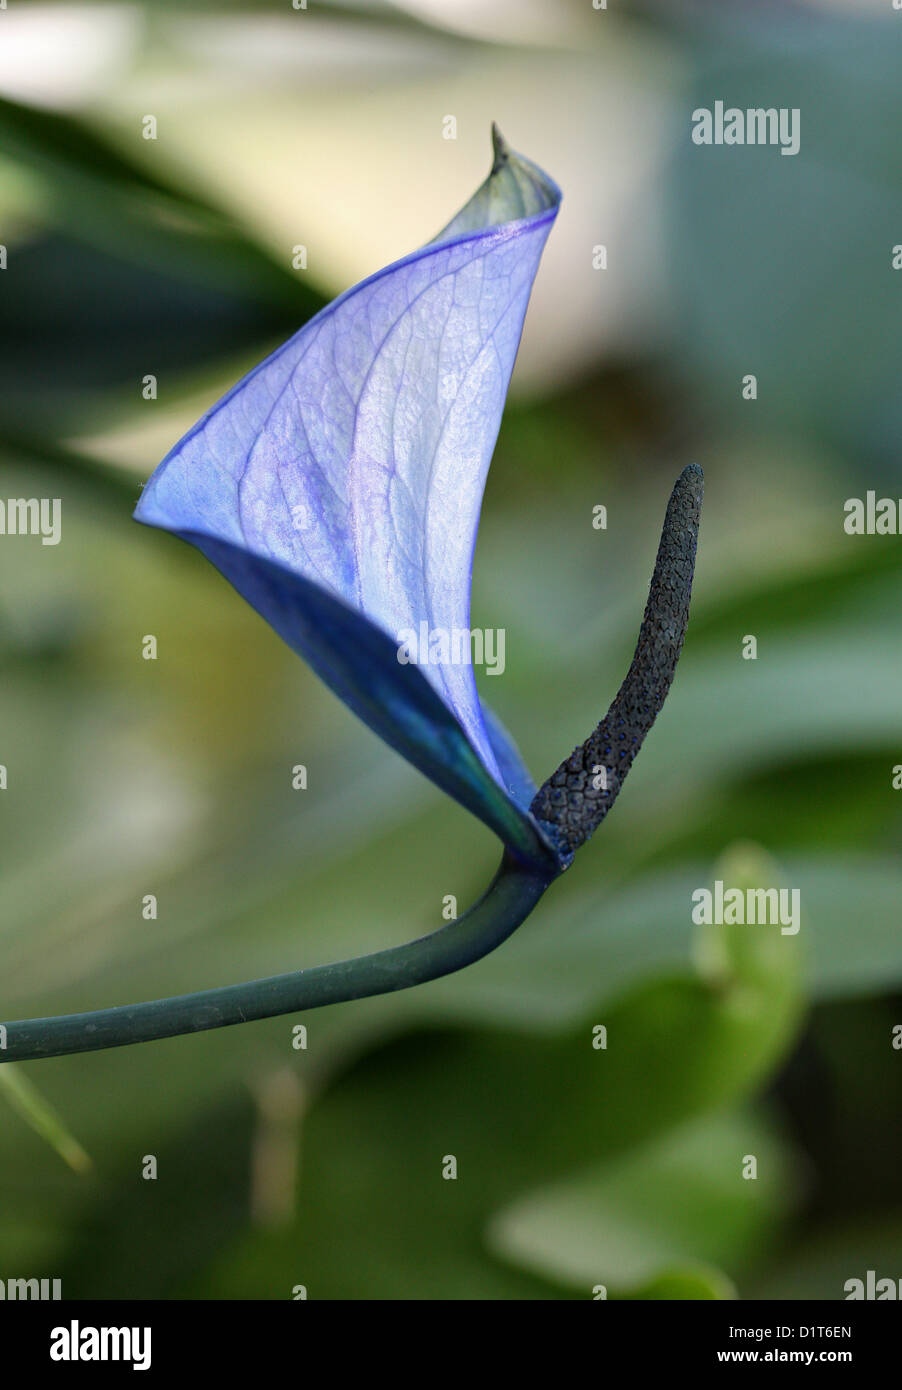 A Blue Peace Lily, Spathiphyllum 'Cupido', Araceae. Stock Photo